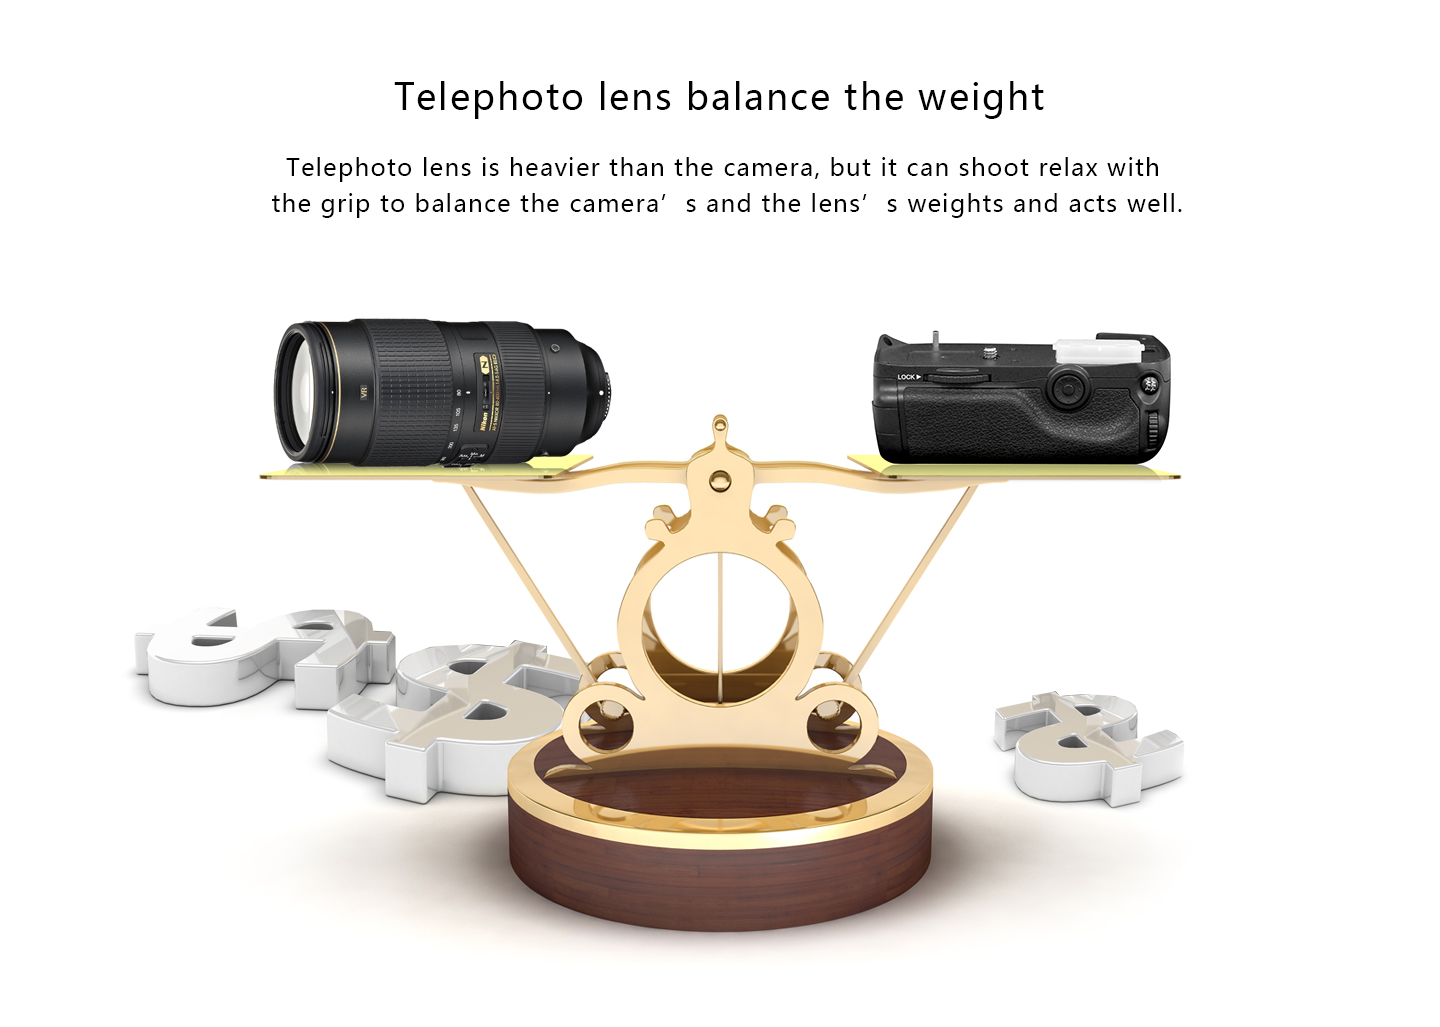 Telephoto lens balance the weight